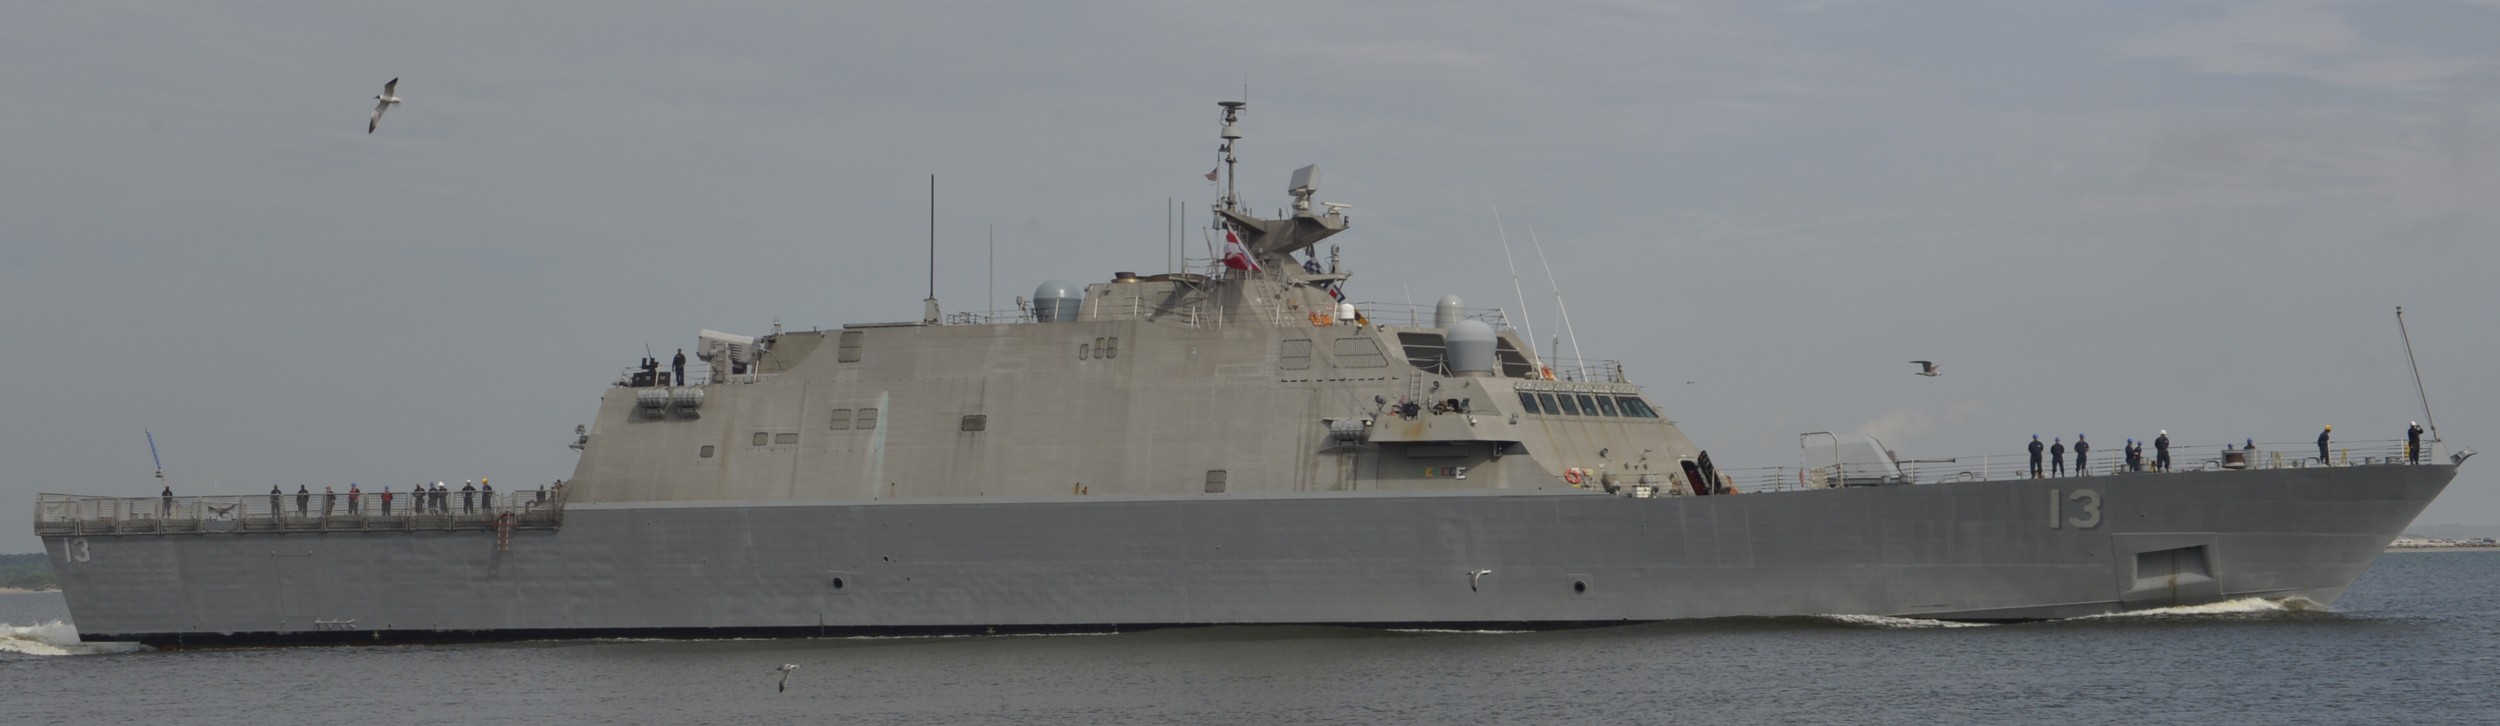 lcs-13 uss wichita freedom class littoral combat ship us navy mayport florida 41